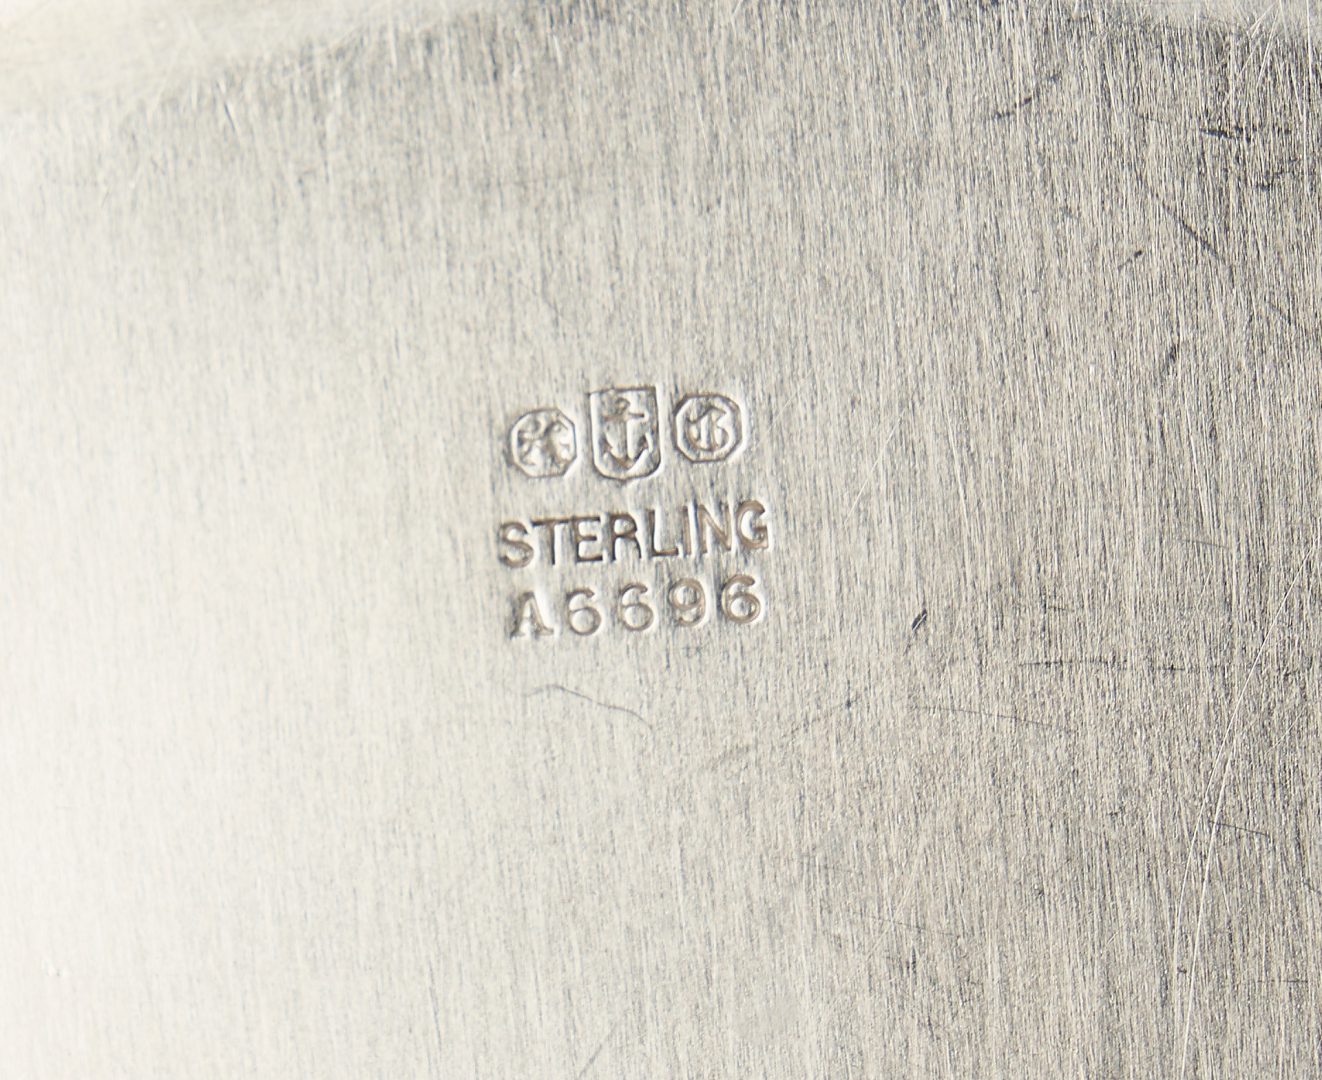 Lot 75: 6 Gorham Octagonal Sterling Silver Plates